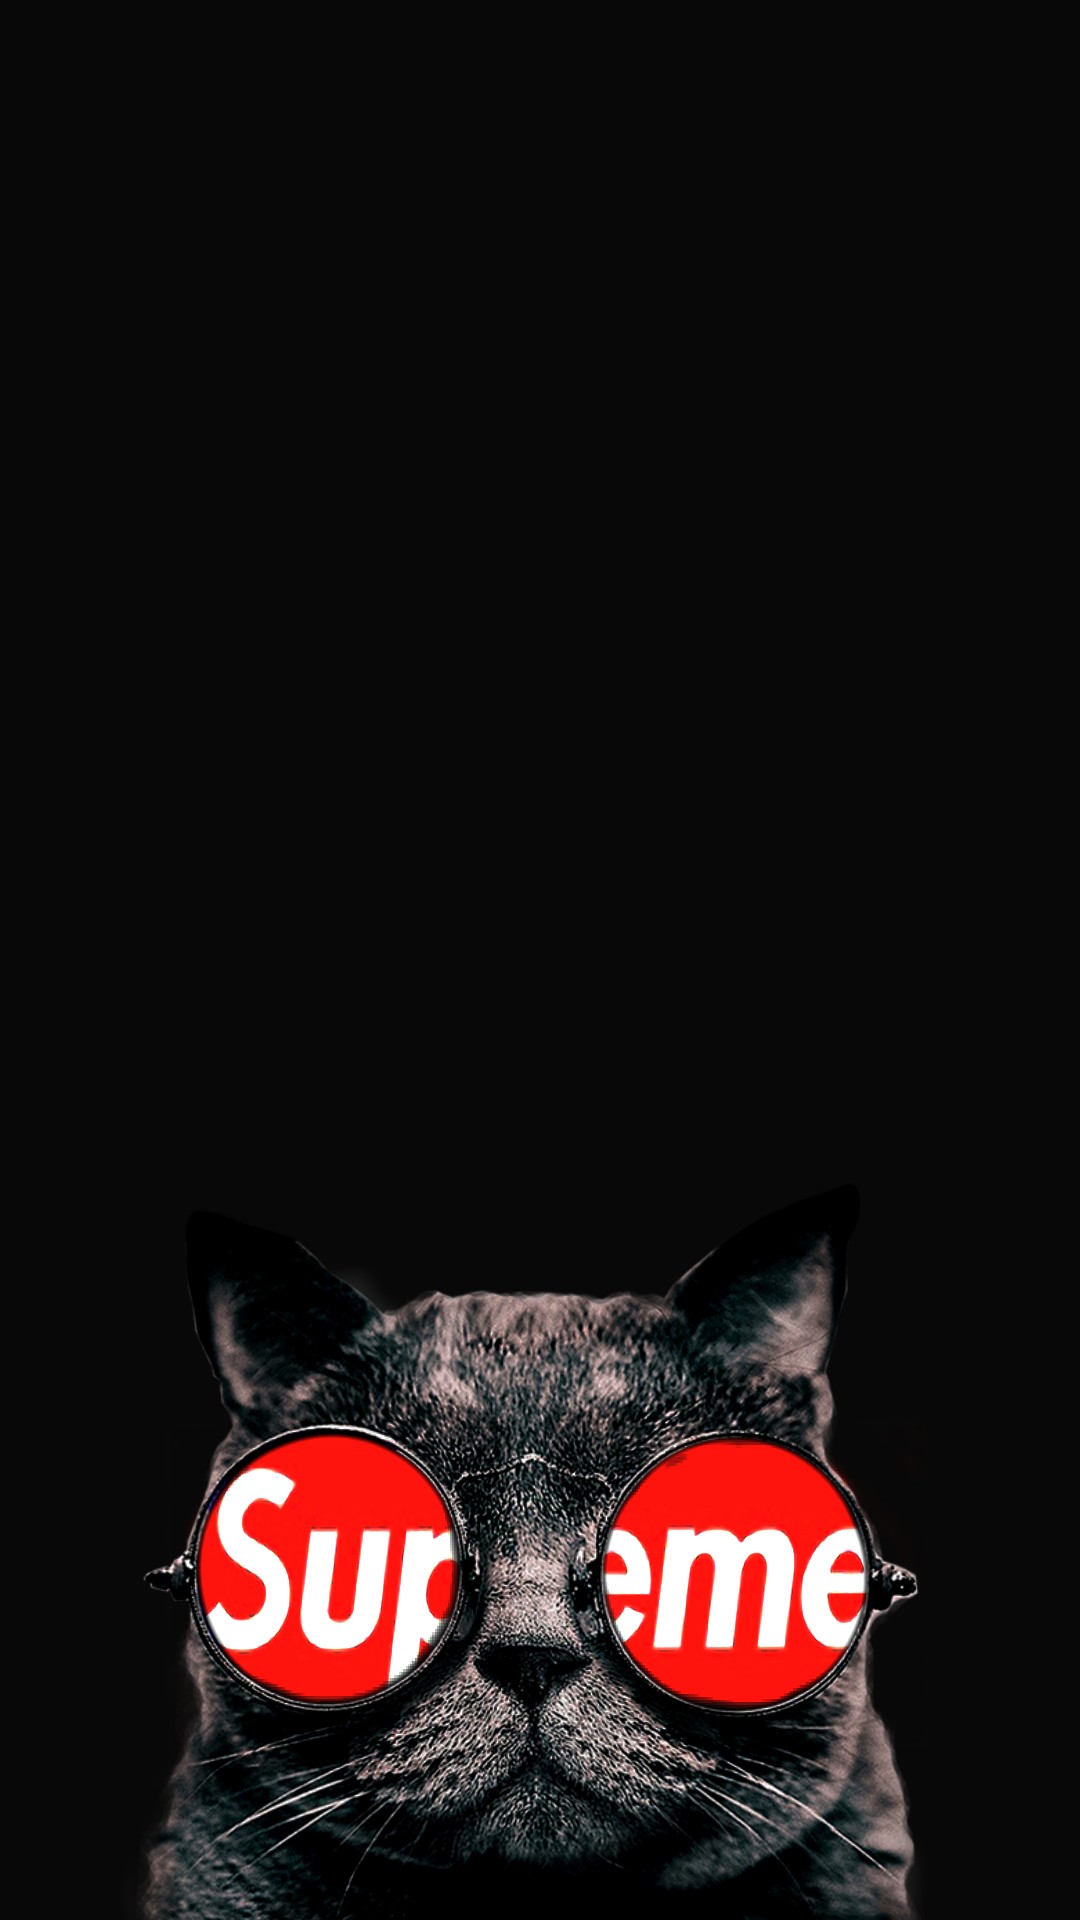 logo supreme cat catsofpicsart - Image by Joe Danial